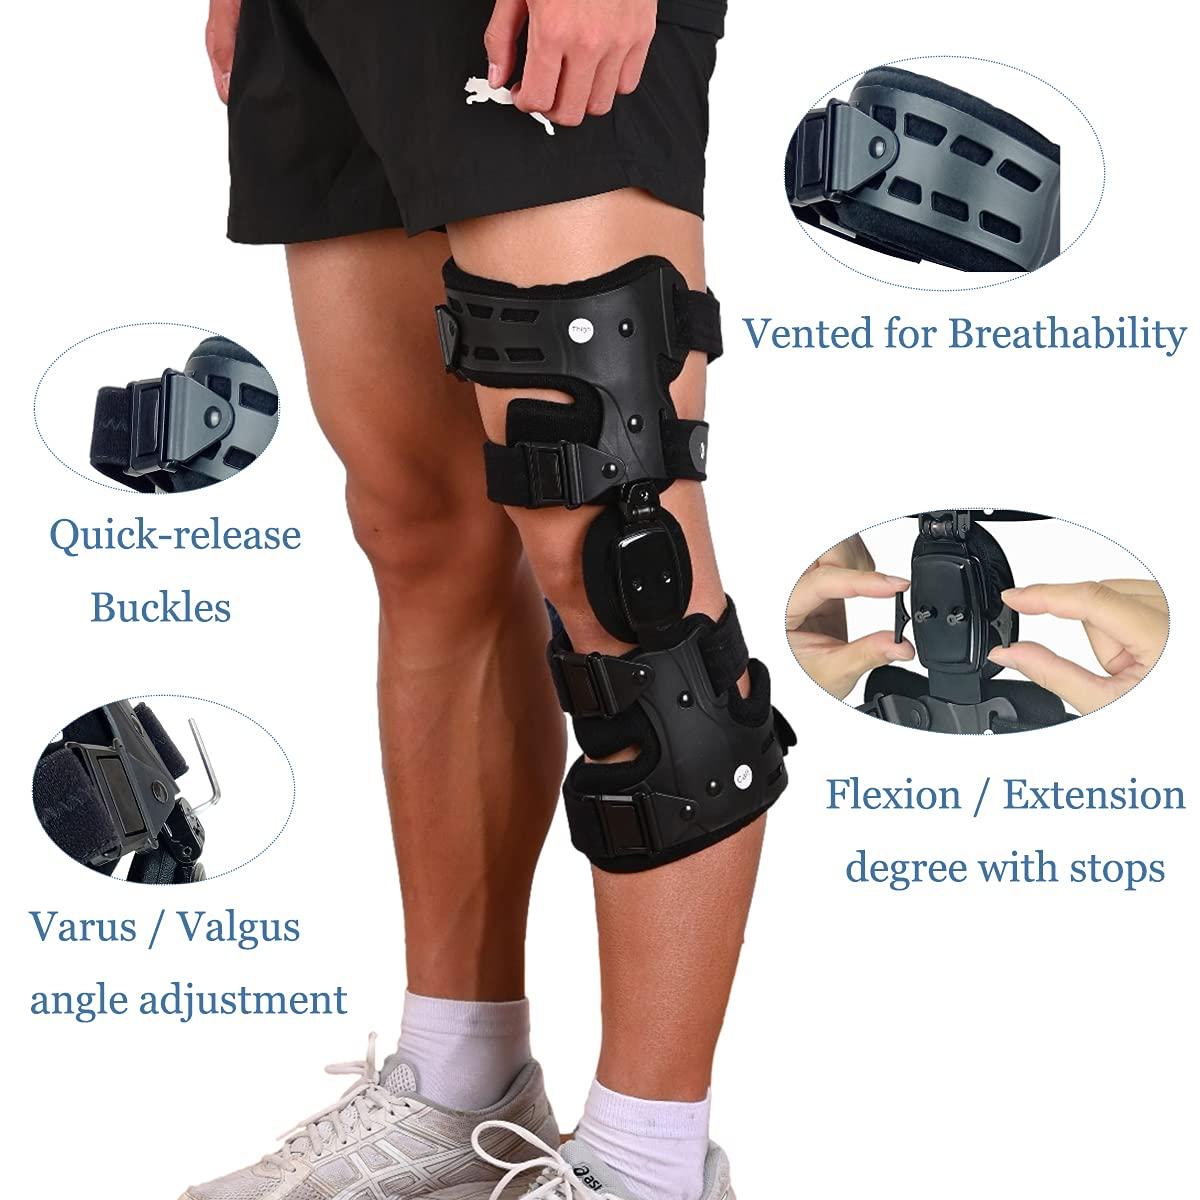 Knee support for arthritis, arthritic knee support brace